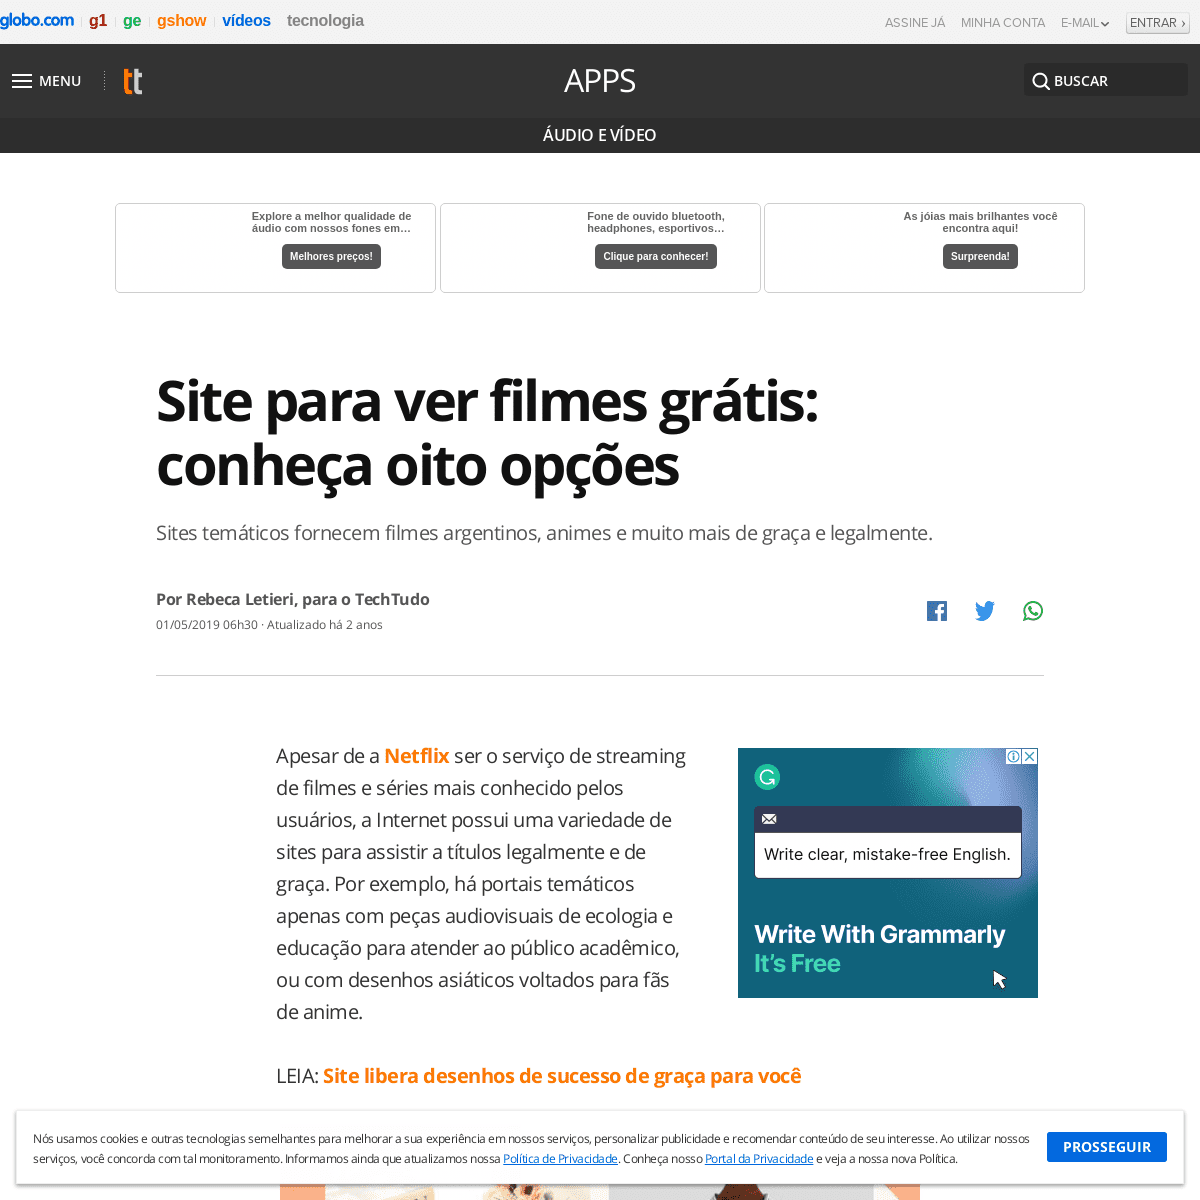 A complete backup of https://www.techtudo.com.br/listas/2019/05/site-para-ver-filmes-gratis-conheca-oito-opcoes.ghtml